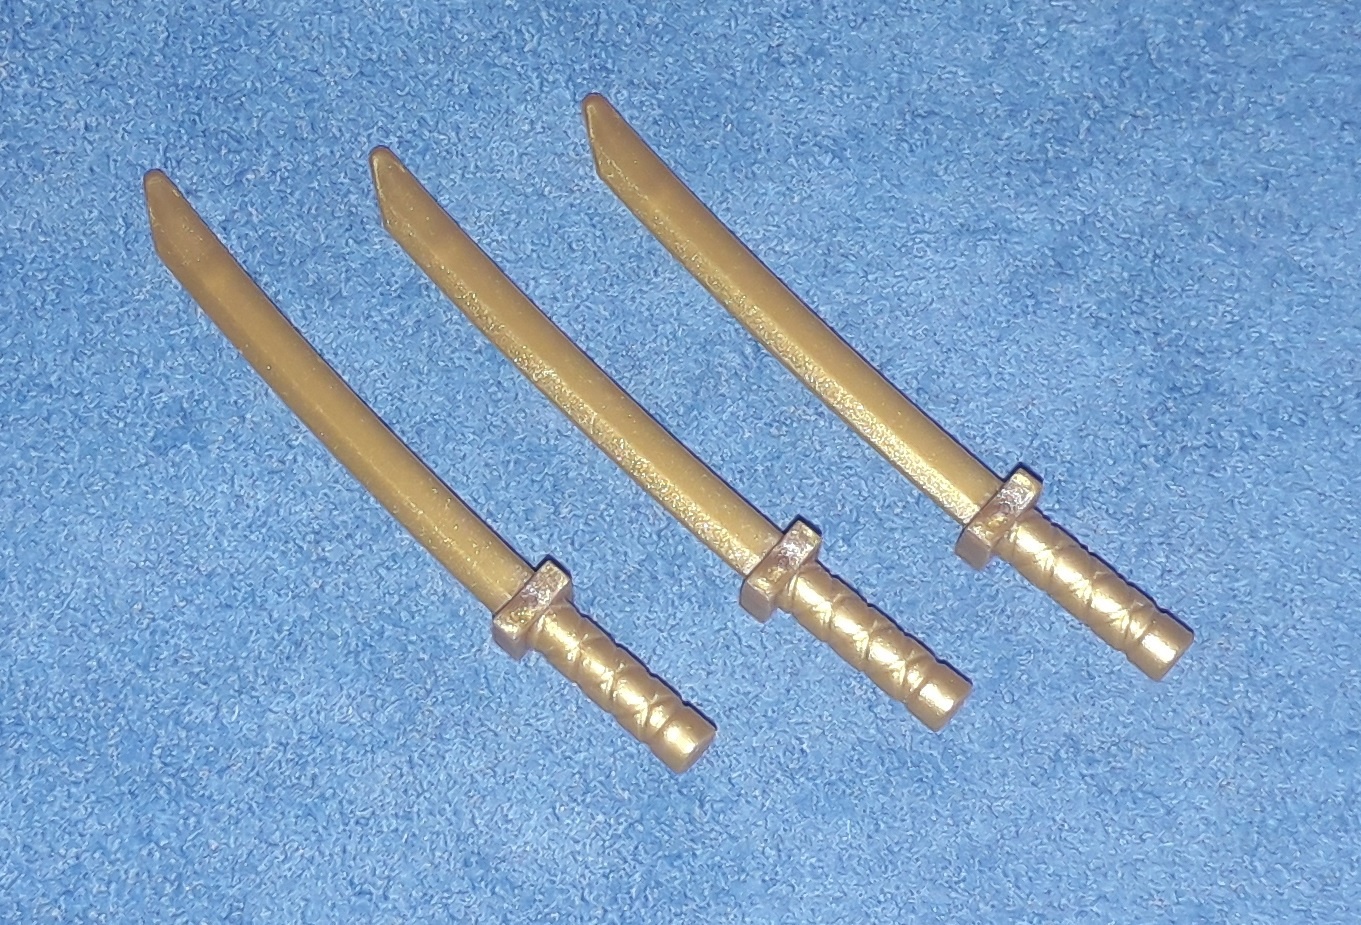 Minifigure, Weapon Sword, Shamshir/Katana (Square Guard) with